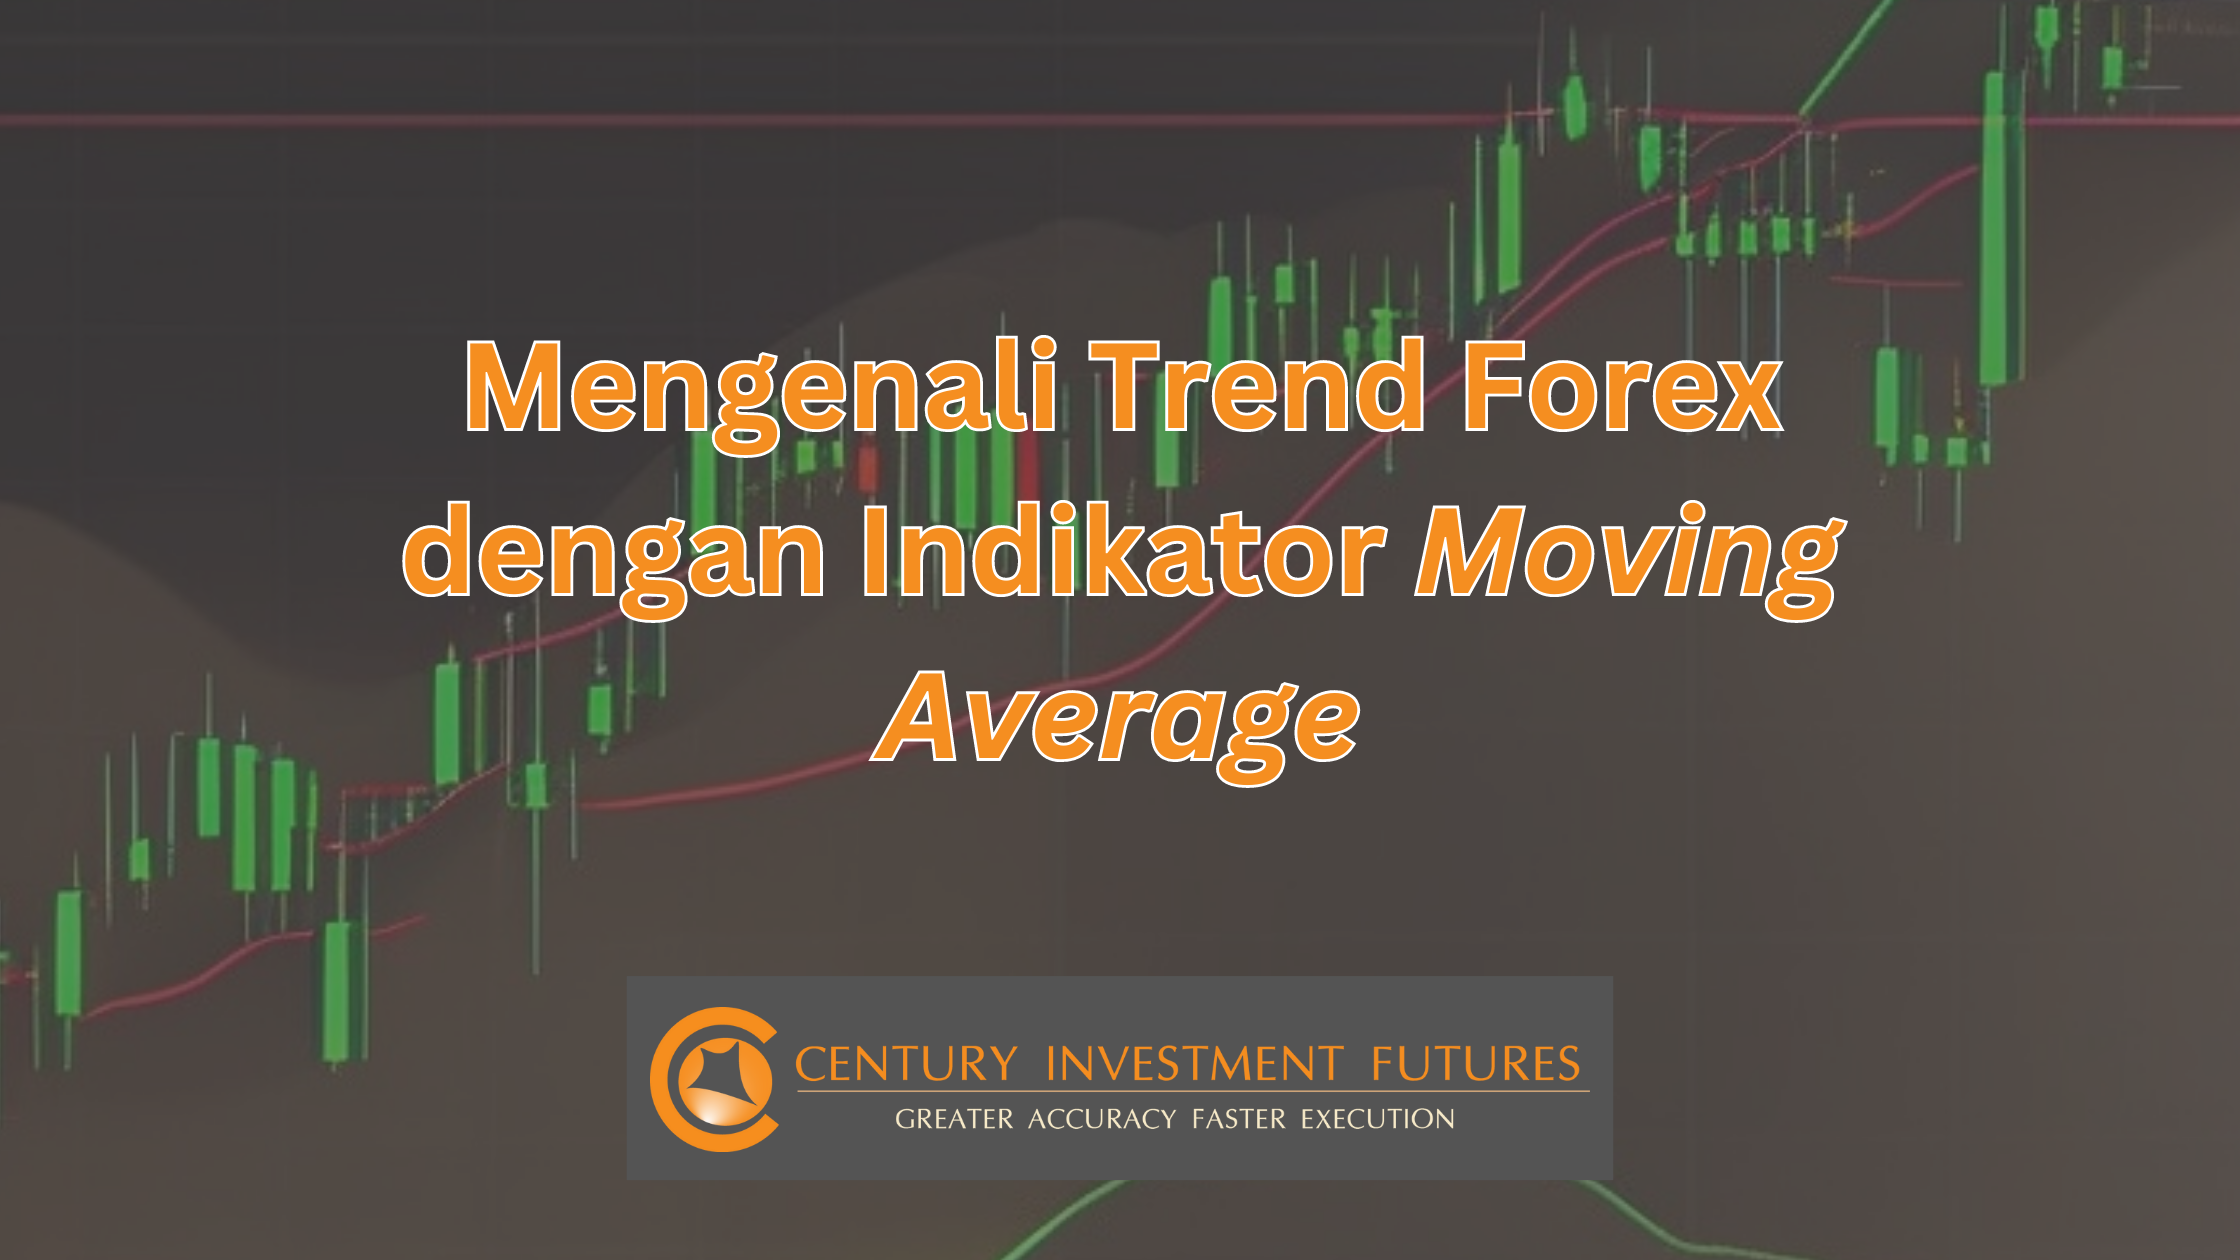 Mengenali Trend Forex dengan Indikator Moving Average